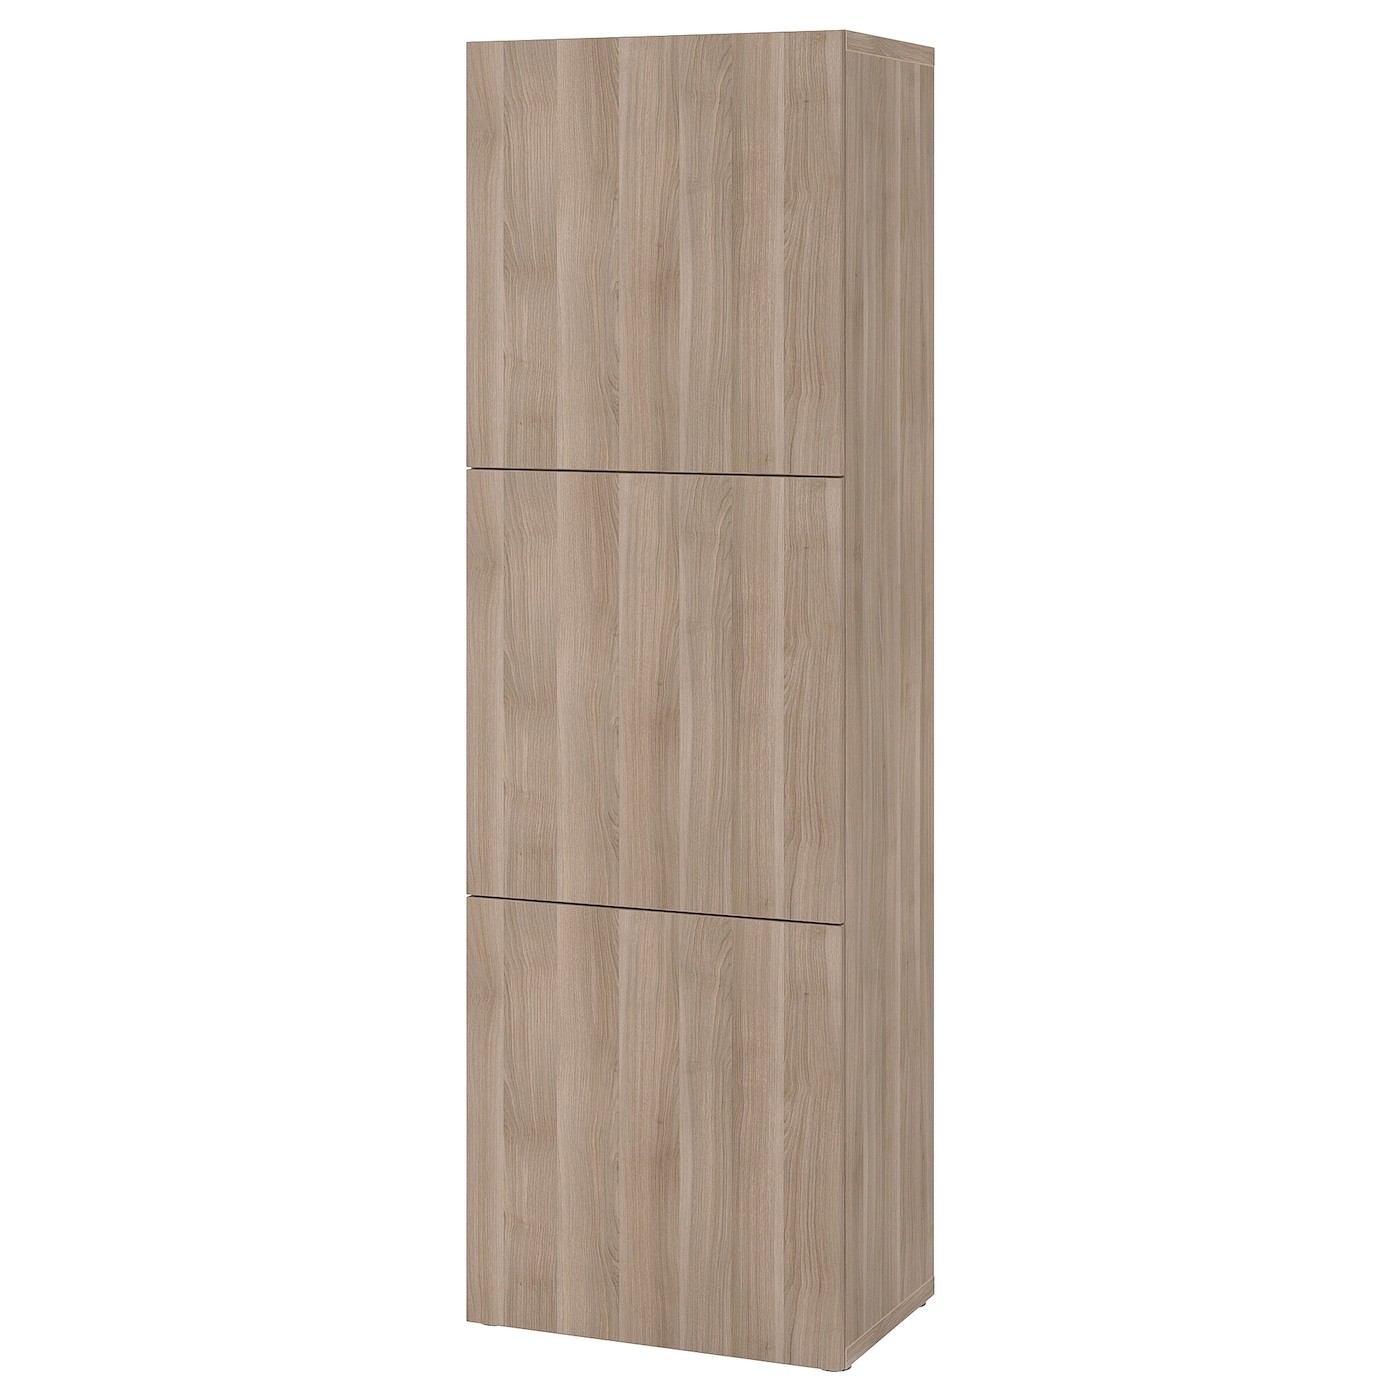 BESTÅ Shelf unit with doors